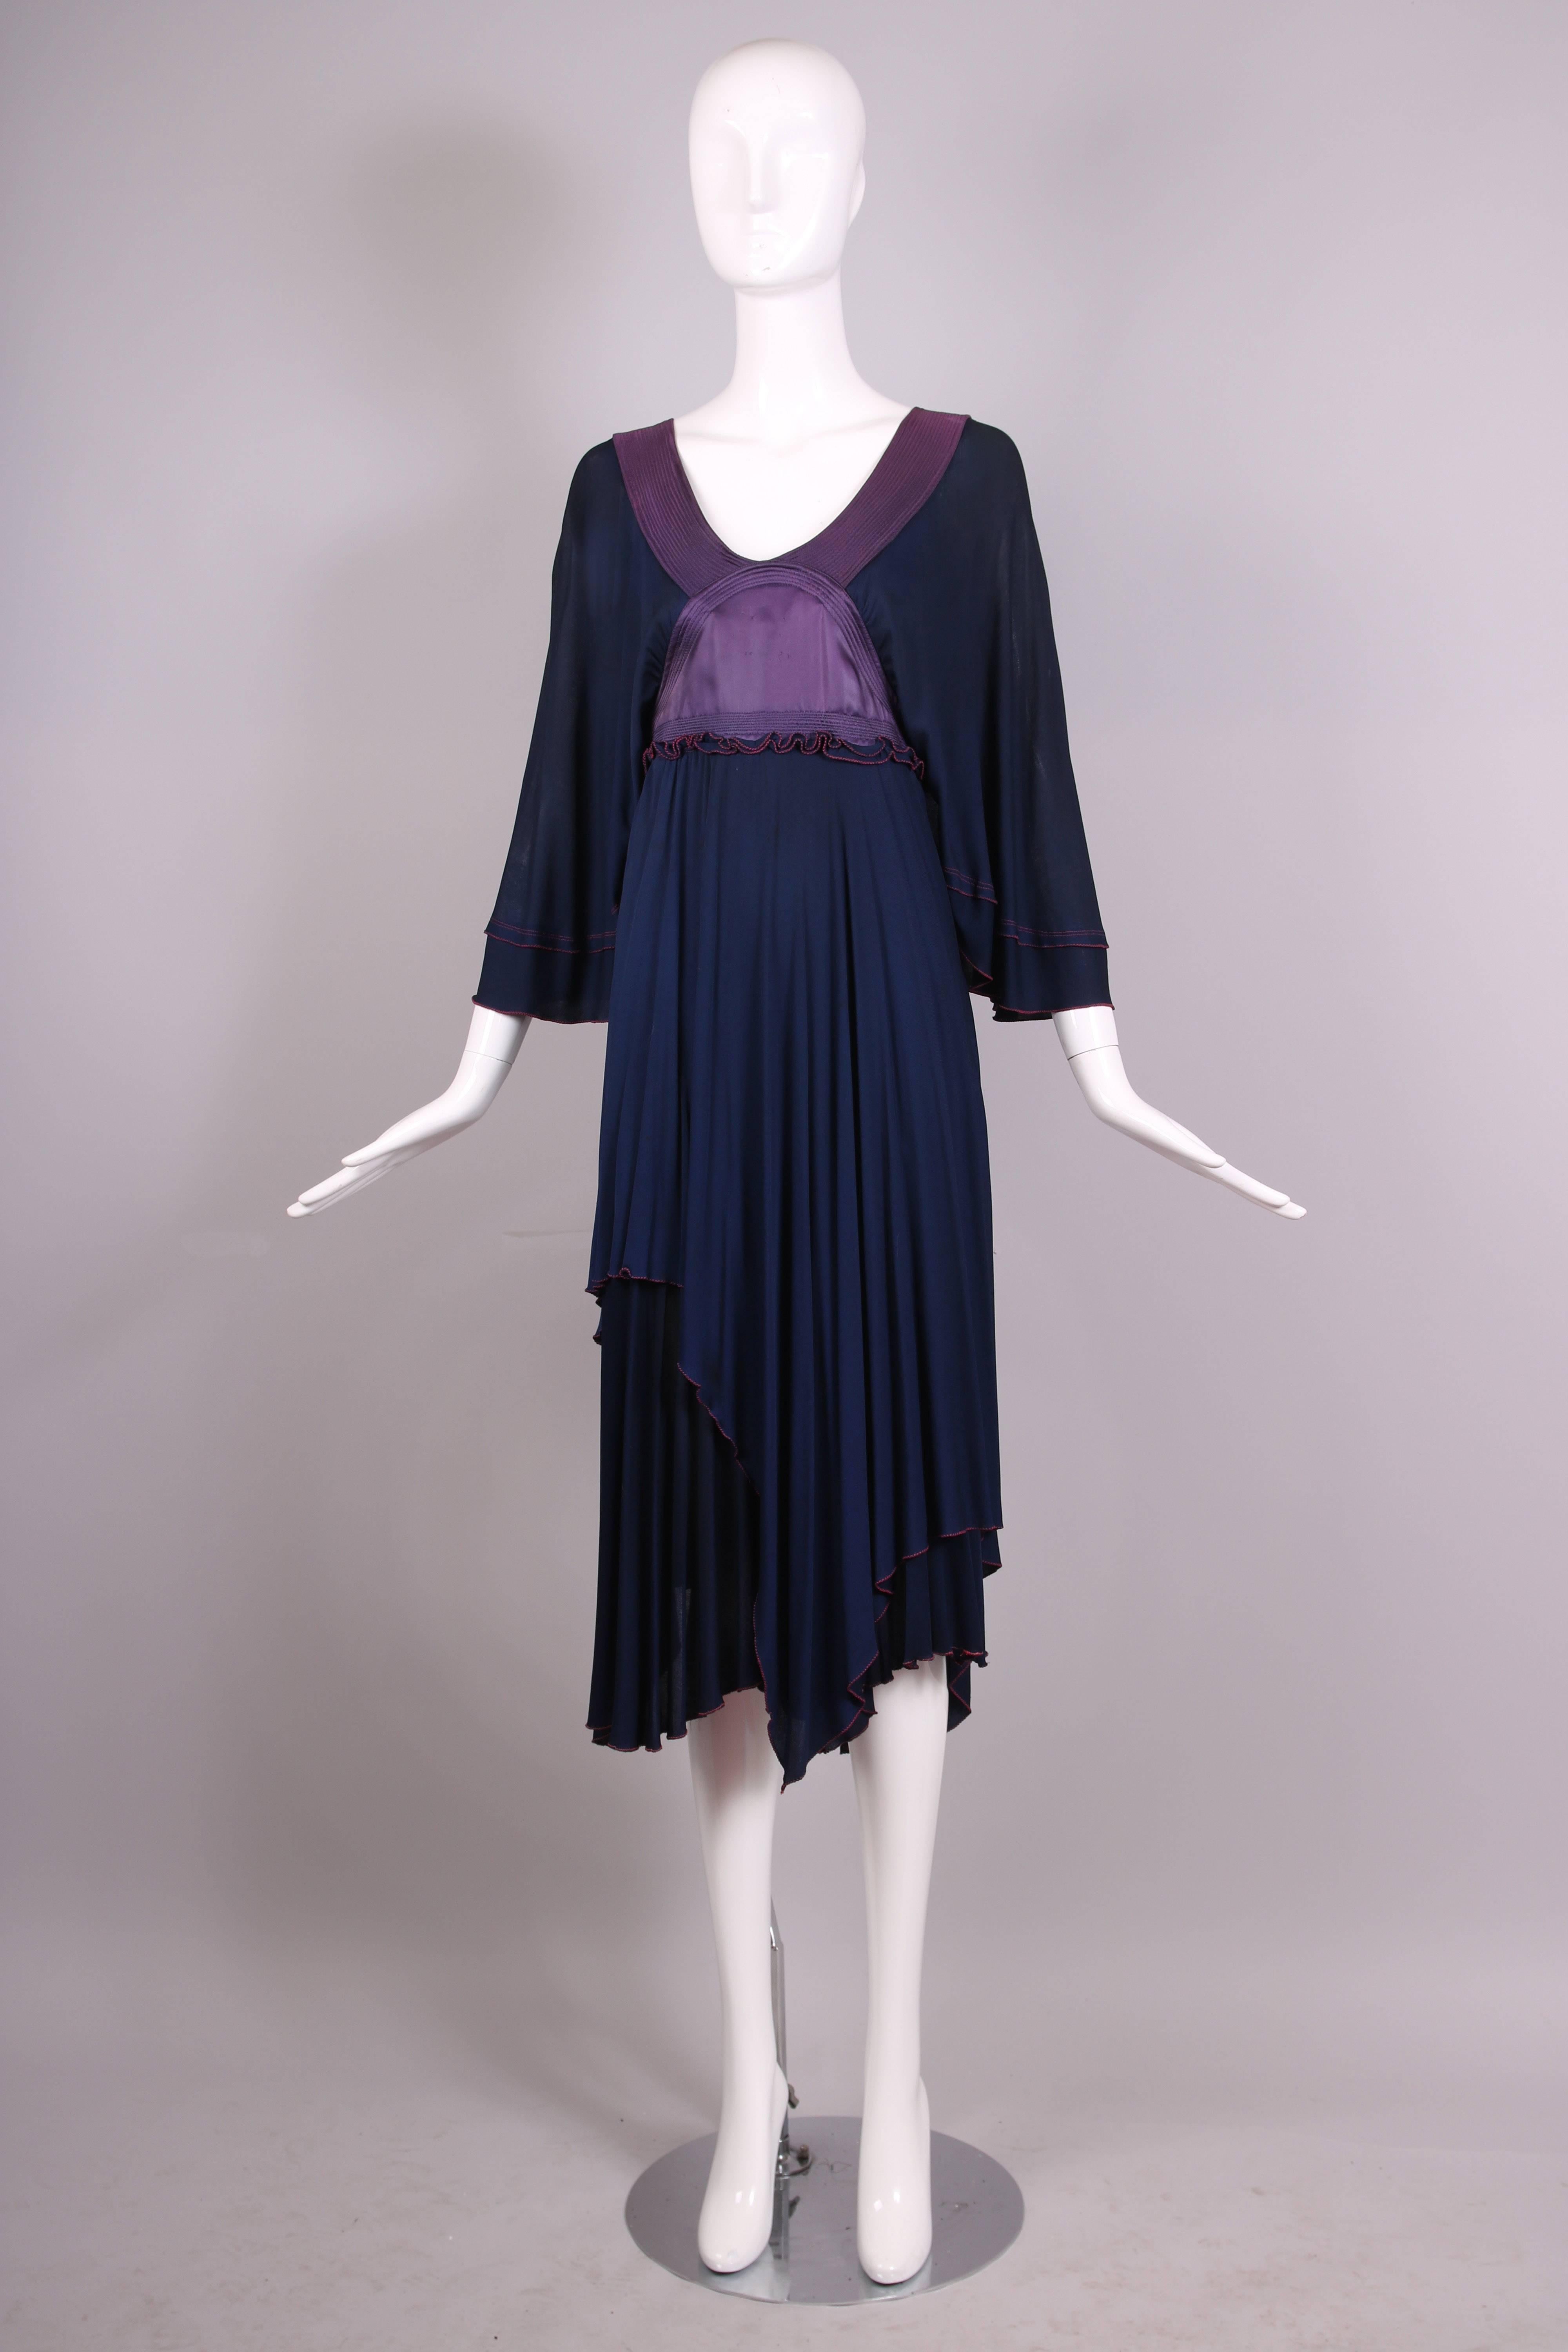 Black Vintage Zandra Rhodes Navy & Purple Empire Waist Dress W/Bat Wing Sleeves